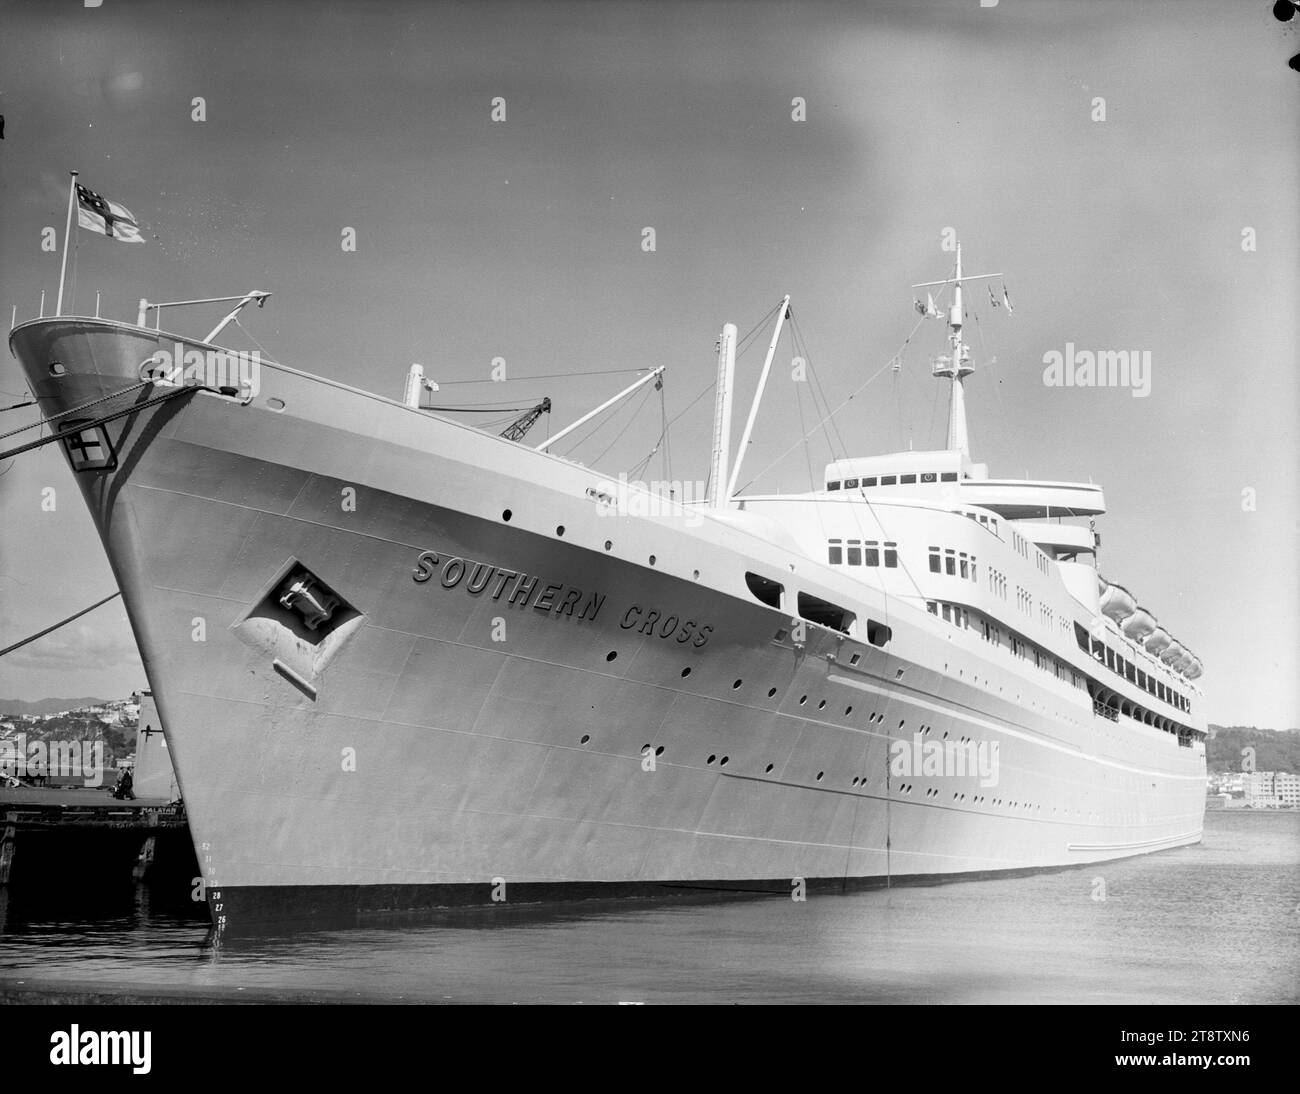 The passenger ship Southern Cross Stock Photo